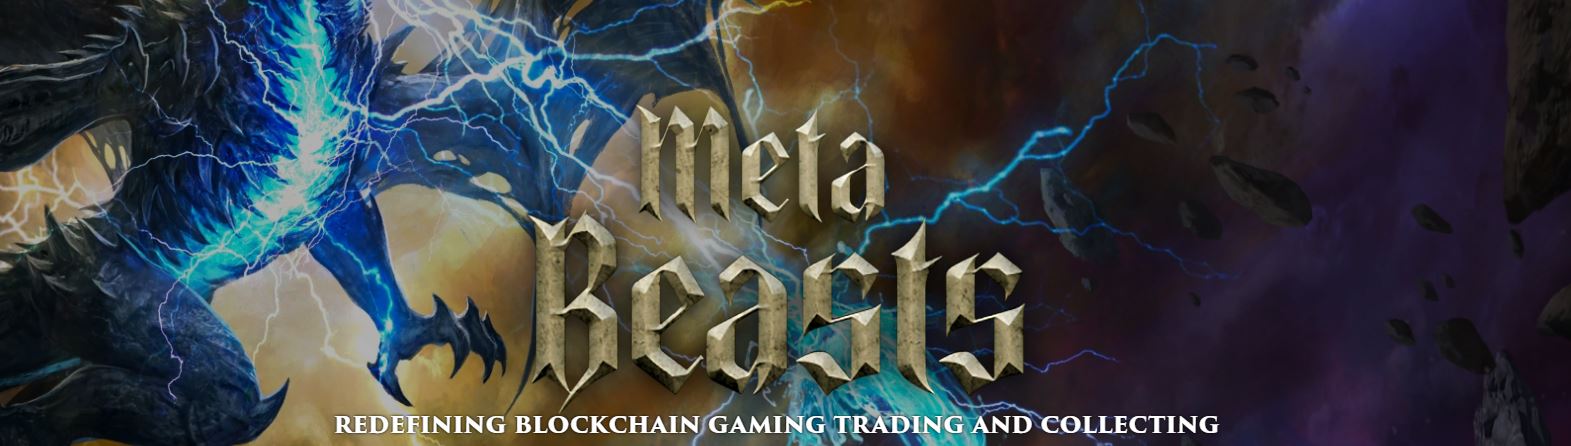 MetaBeasts banner